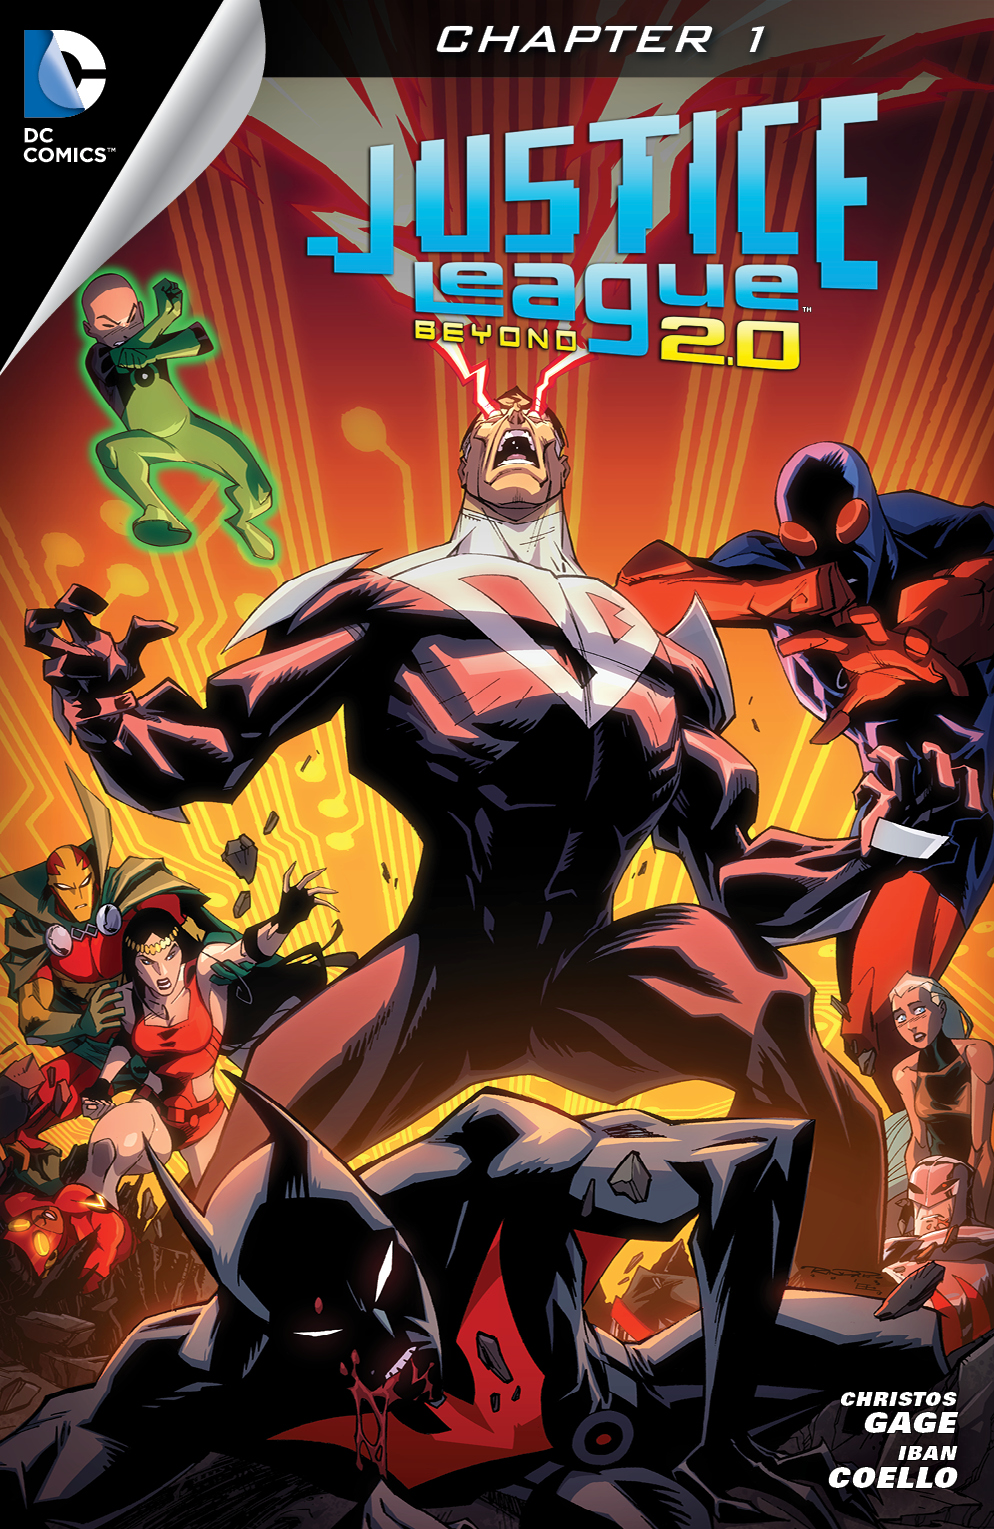 Justice League Beyond 2.0 #1 preview images